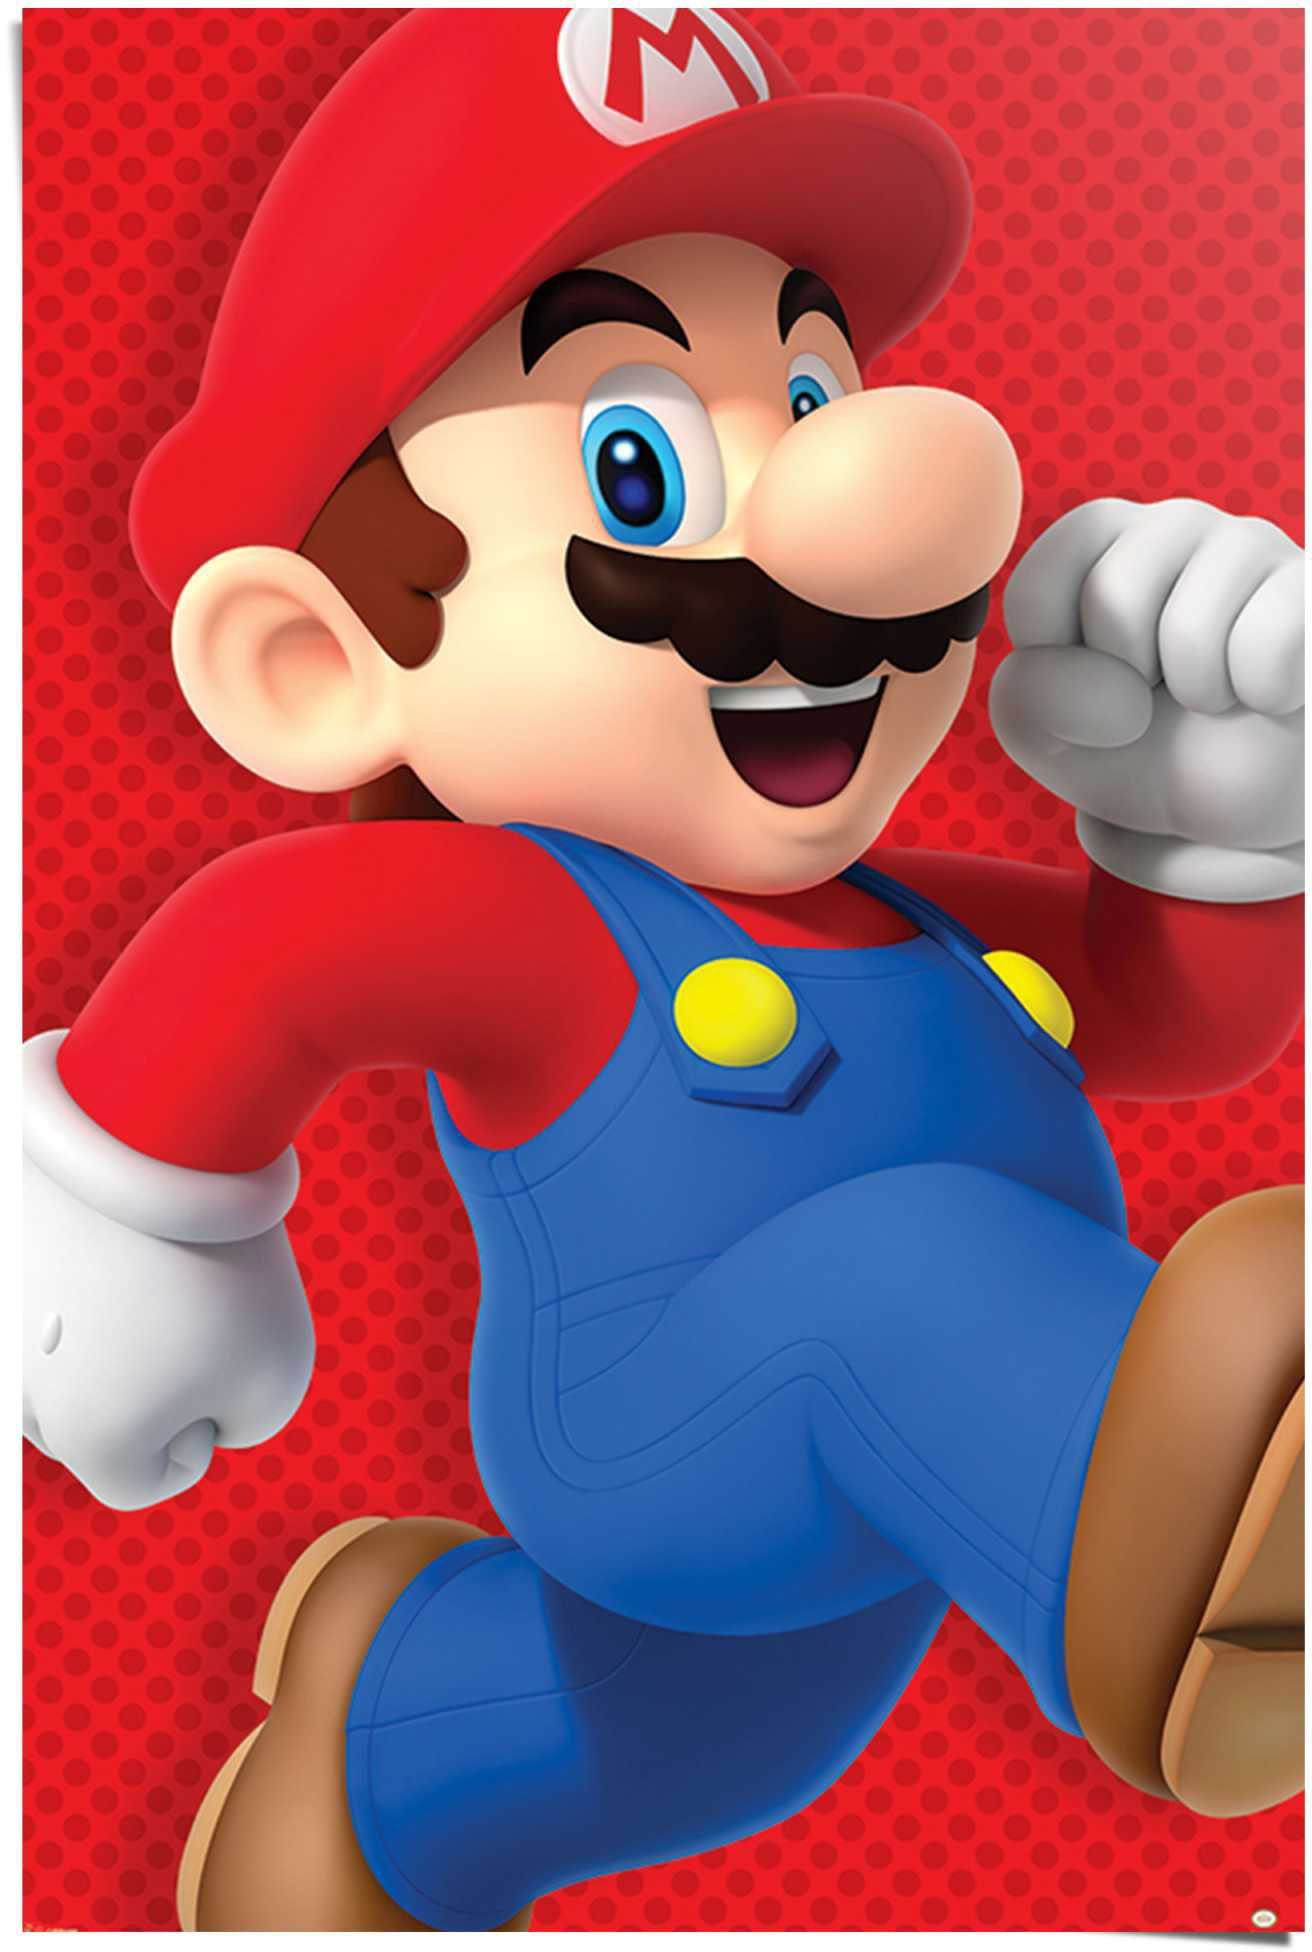 Reinders! Poster Super Mario Nintendo (1 stuk)